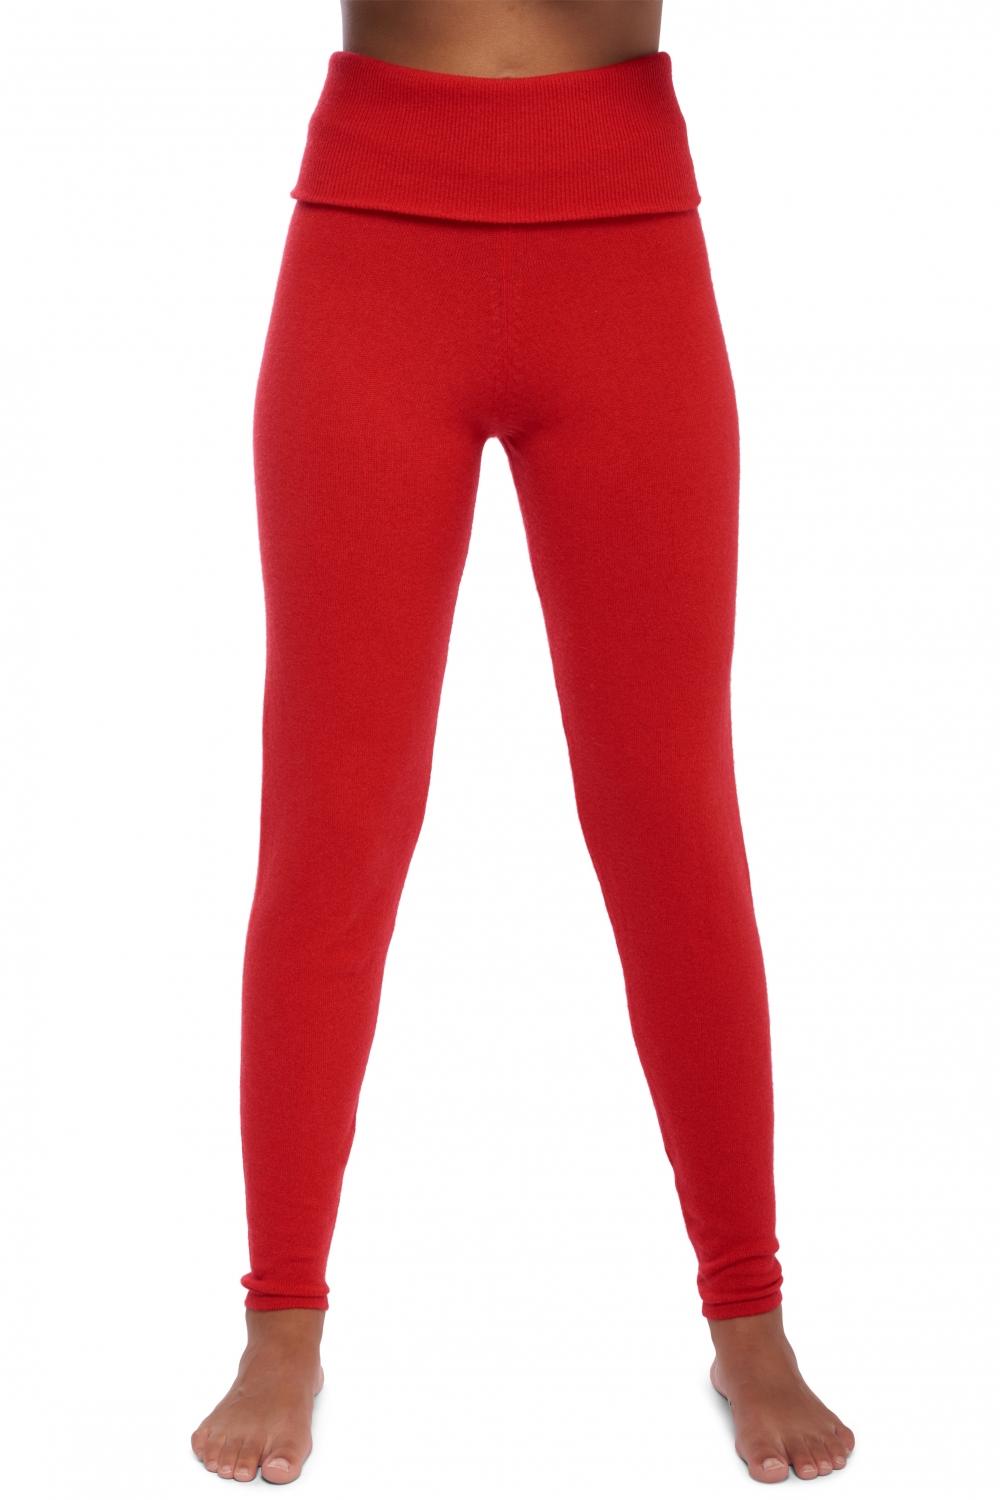 Cachemire accessoires homewear shirley rouge 4xl